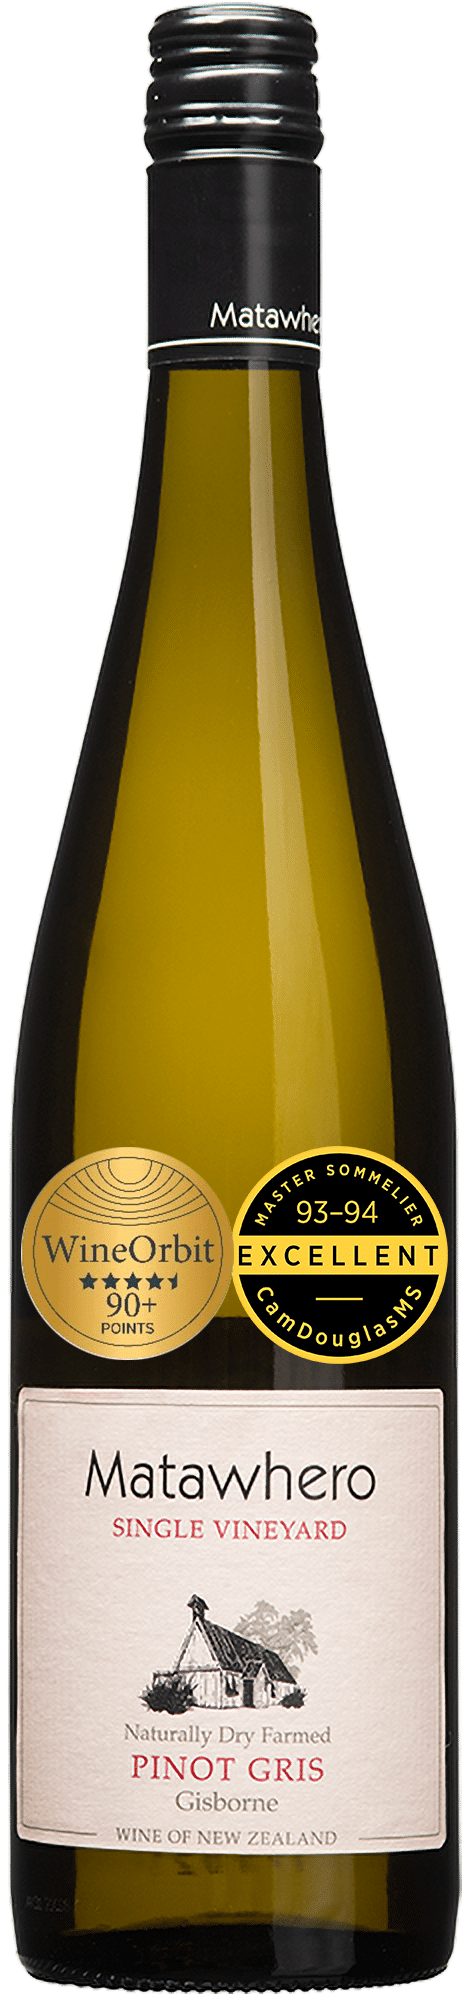 Single Vineyard Pinot Gris - 10% OFF 6 PACK SPECIAL - Matawhero